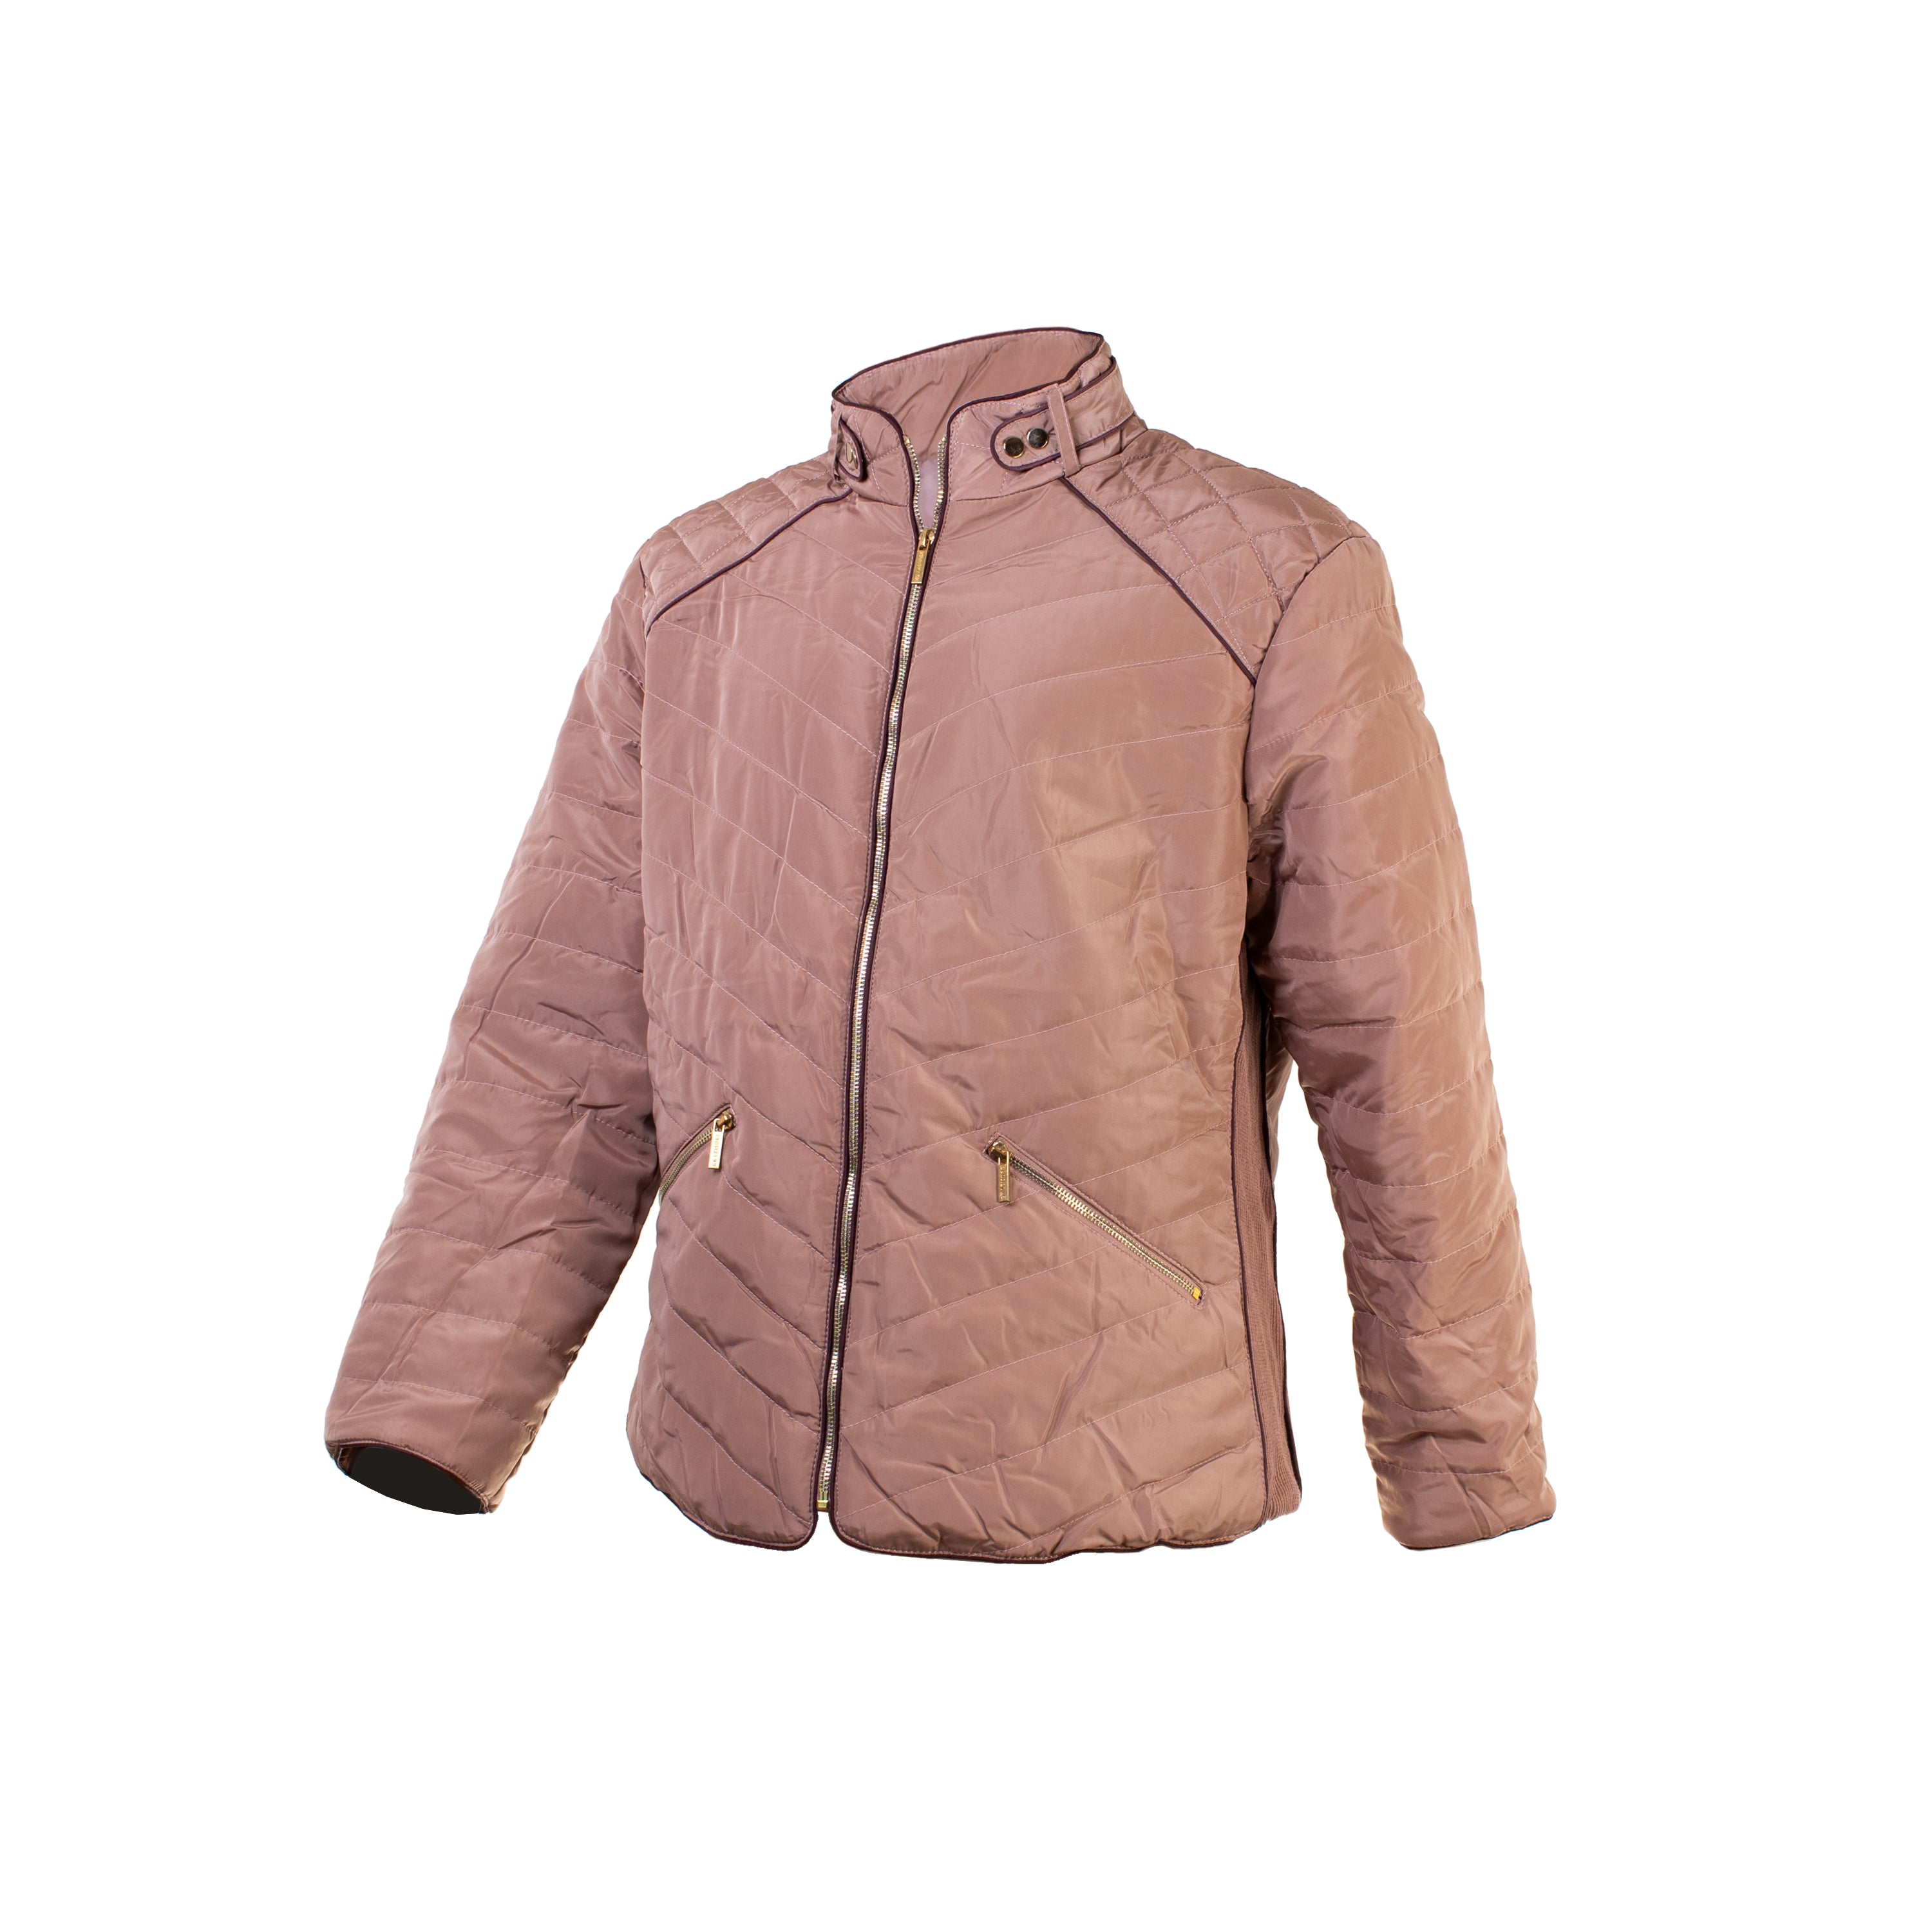 Wholesale Women's Puffer Coats in Assorted Sizes - Bulk Case of 24 Jackets